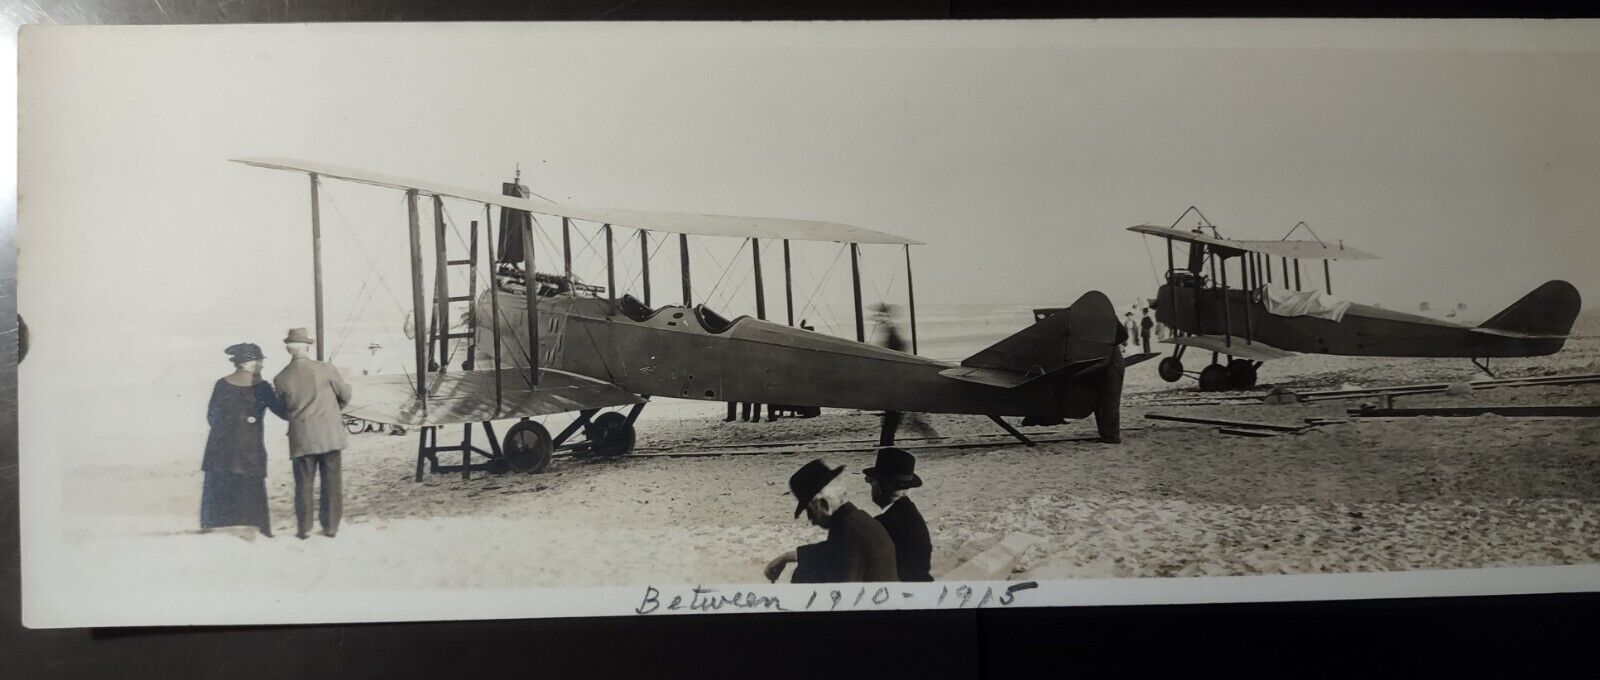 RARE PANORAMIC RPPC POSTCARD OF 2 INVERTED JENNY BIPLANE AIRPLANES CIRCA 1910.